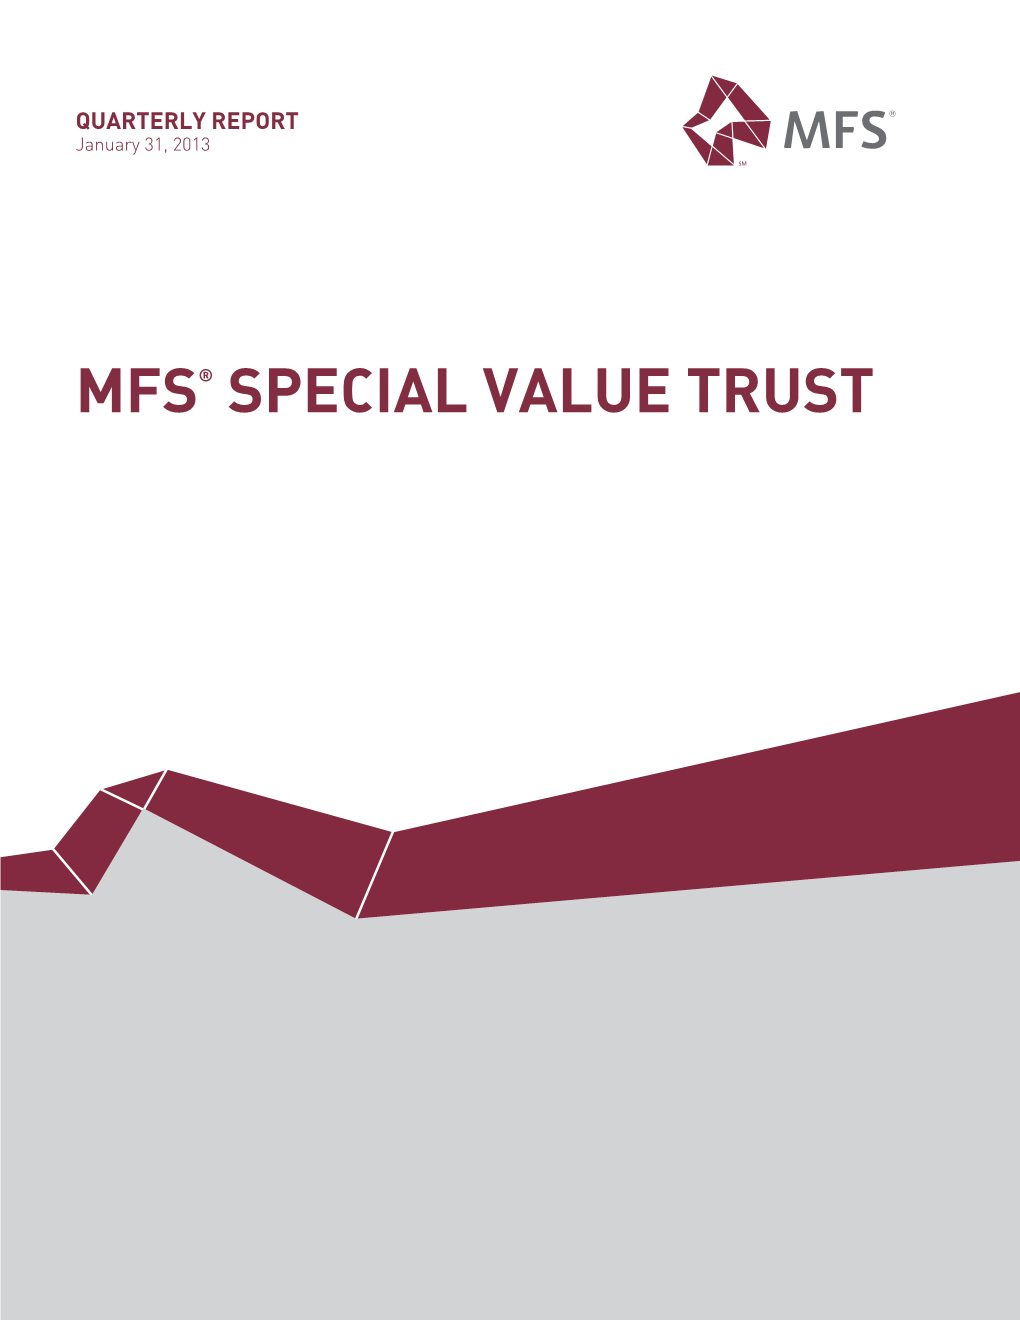 MFS Special Value Trust